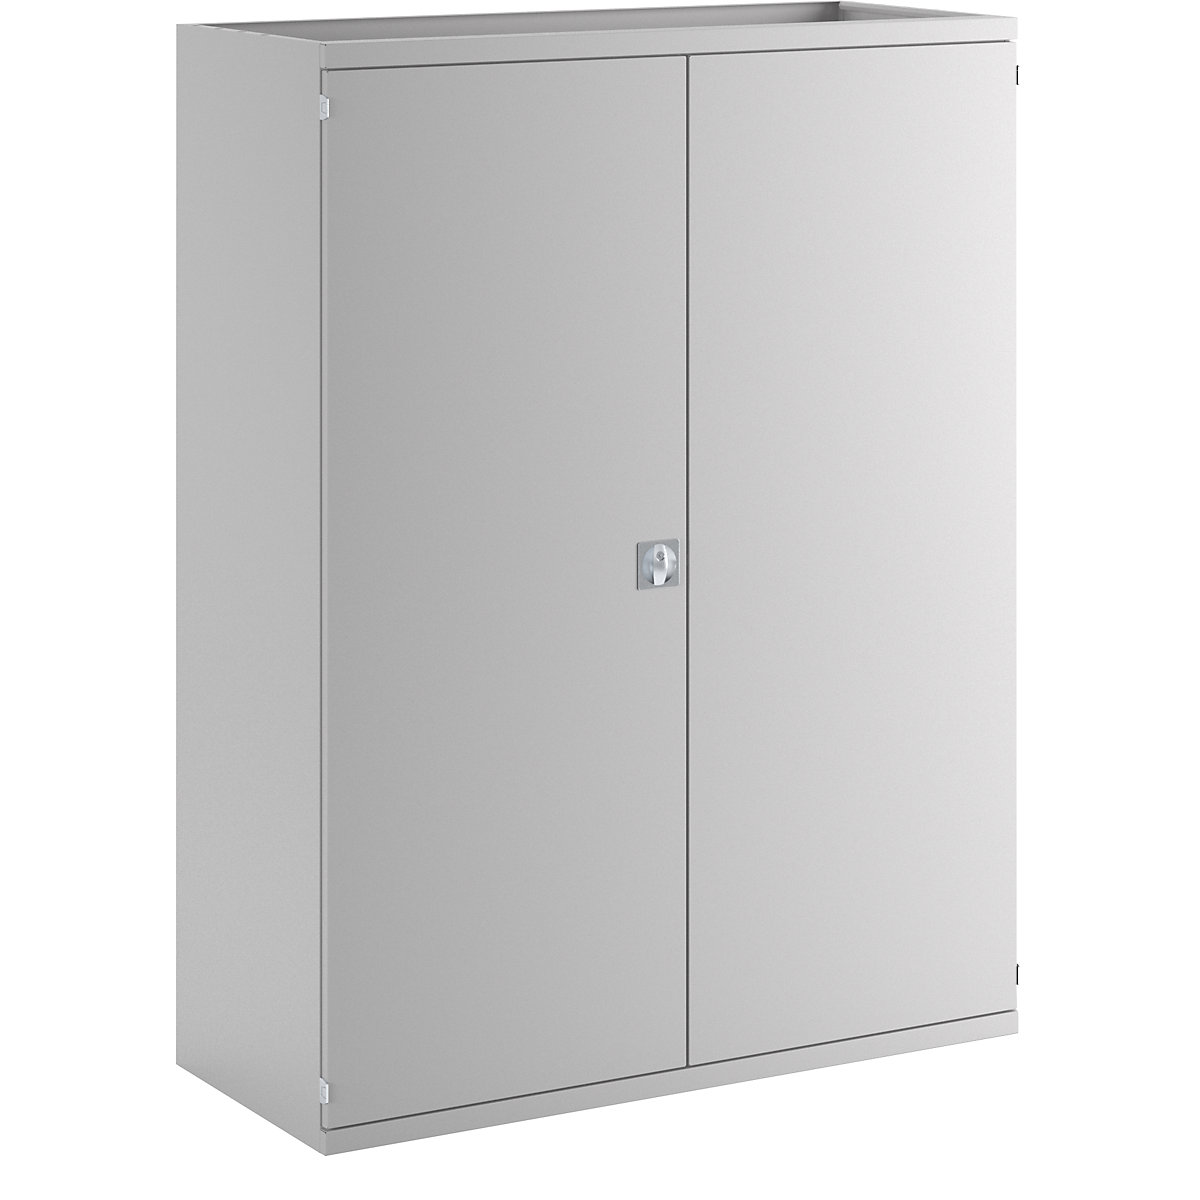 JUMBO heavy duty cupboard made of sheet steel – eurokraft pro, 6 shelves, 4 x 180 mm high drawers, light grey / light grey-3